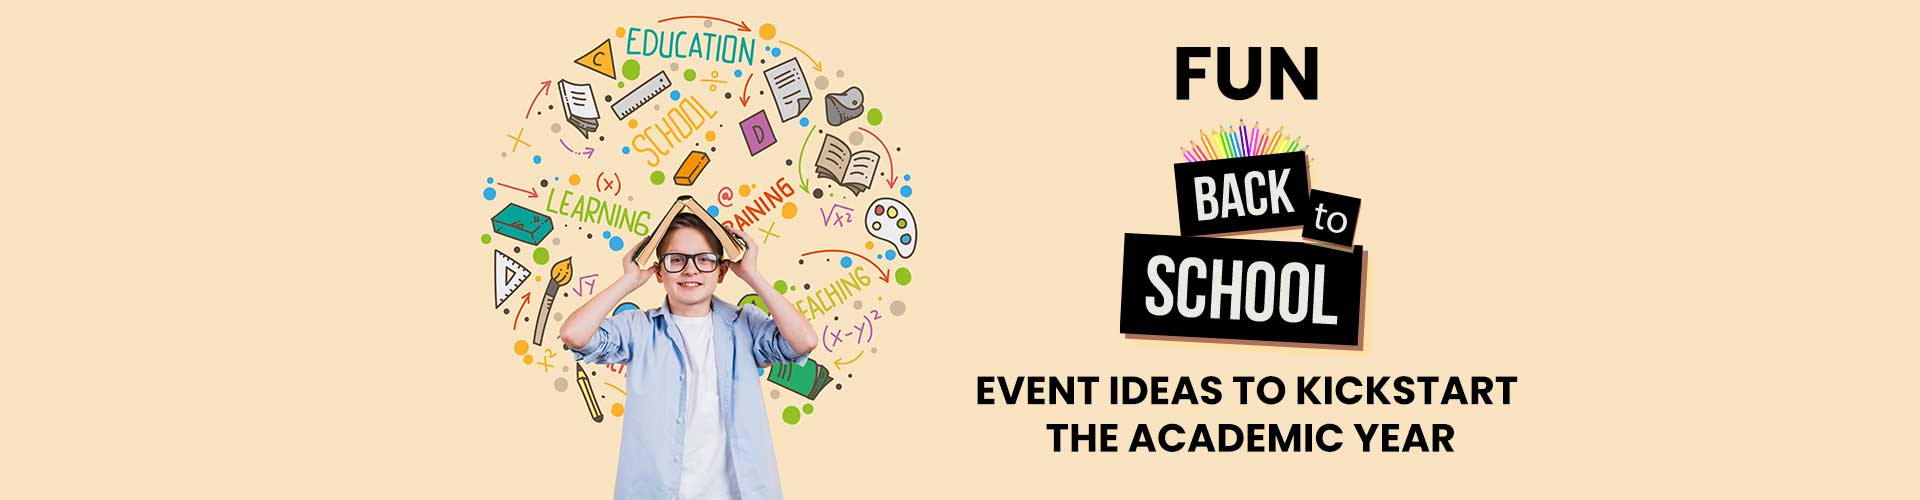 Fun Back to School Event Ideas to Kickstart the Academic Year